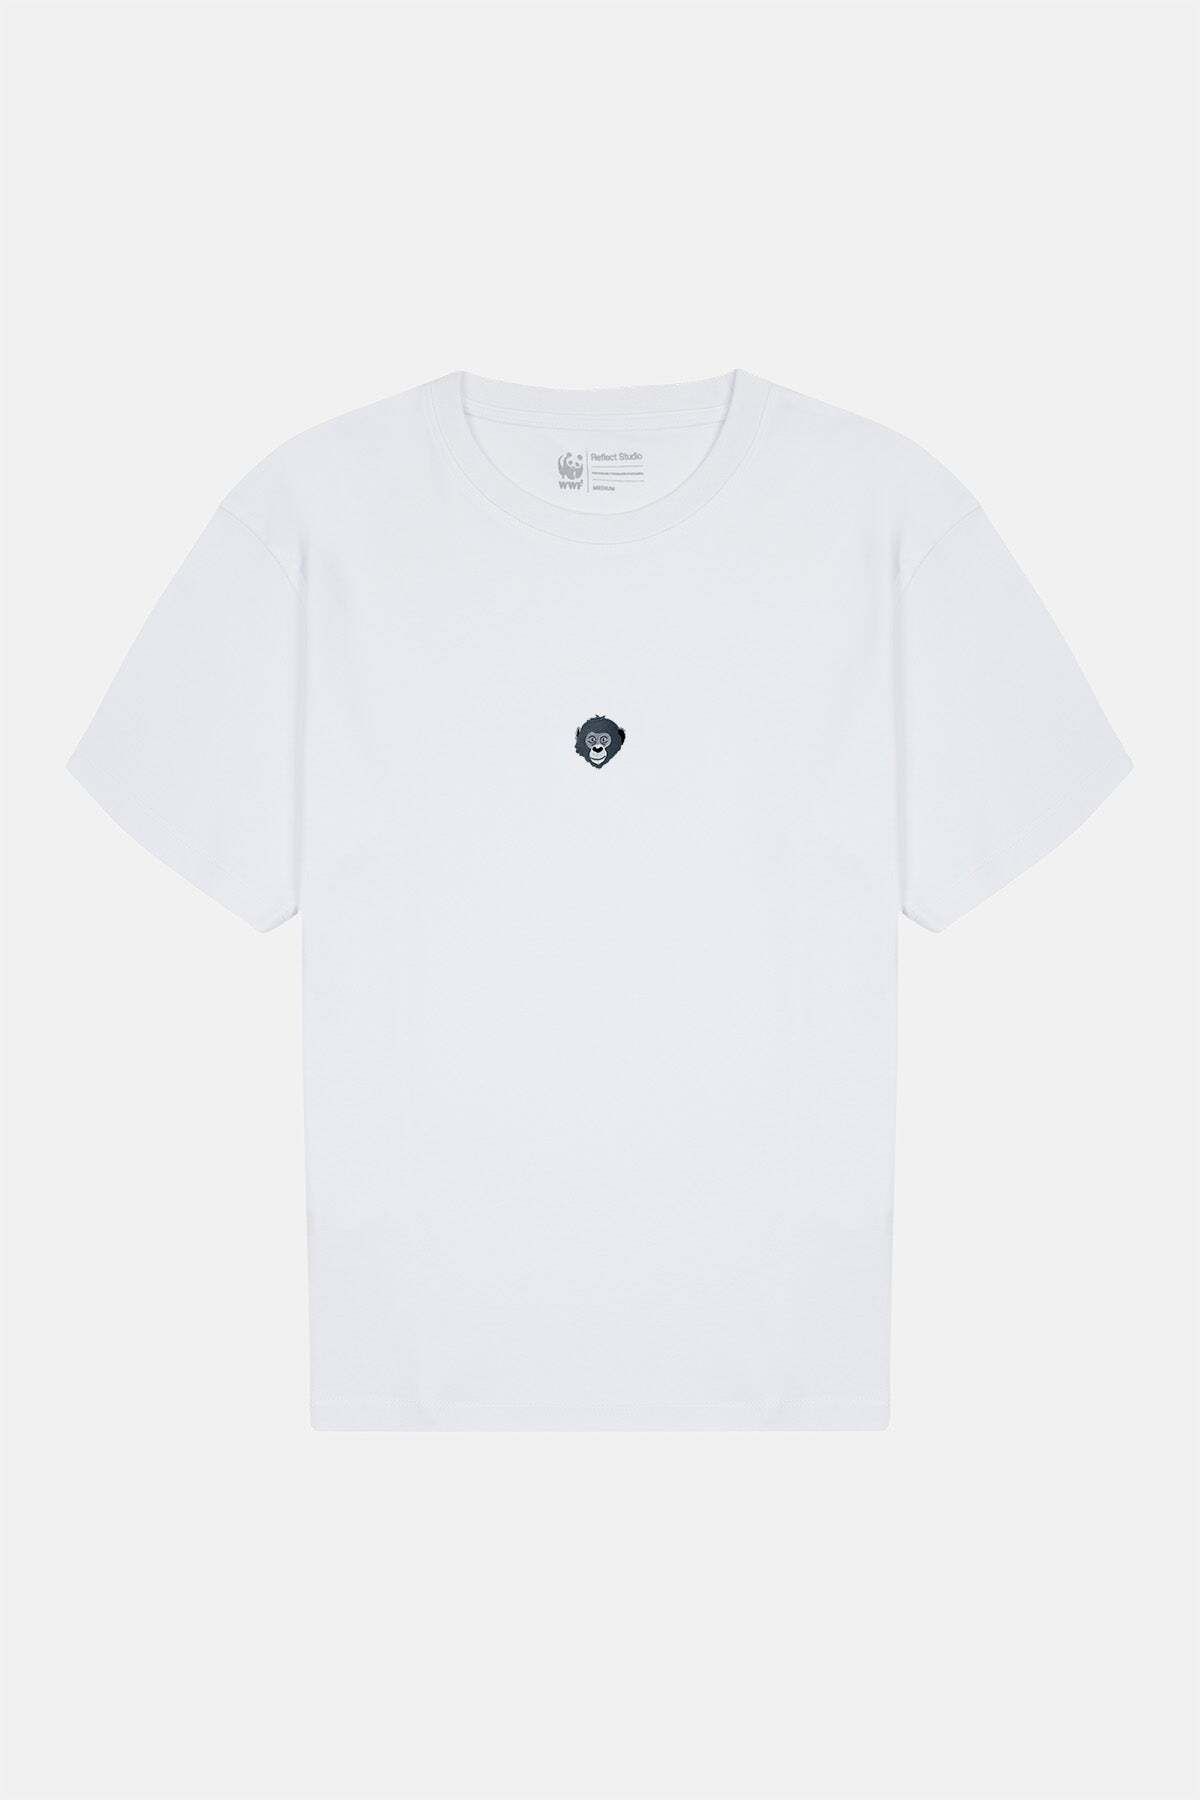 WWF Market Bonobo Soft T-Shirt - Beyaz